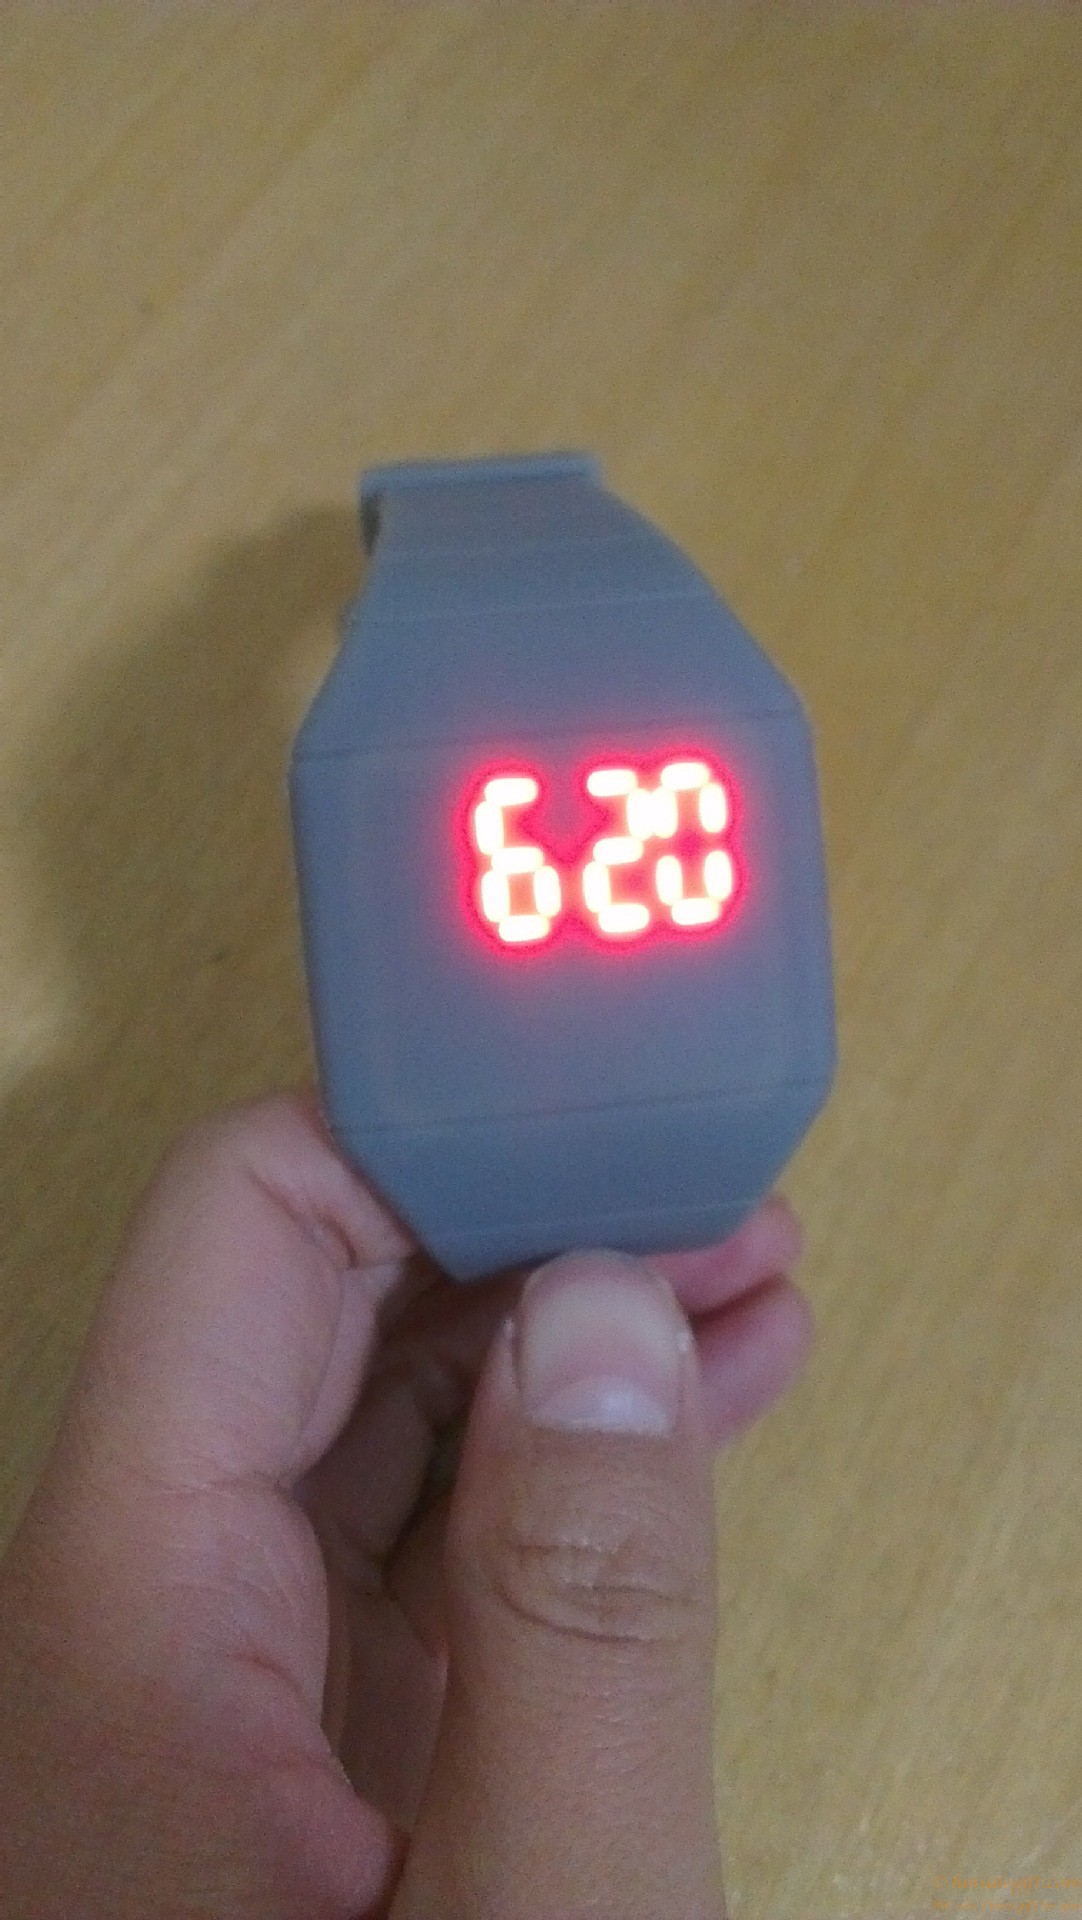 hotsalegift ultrathin touch screen led watch gift watch 7